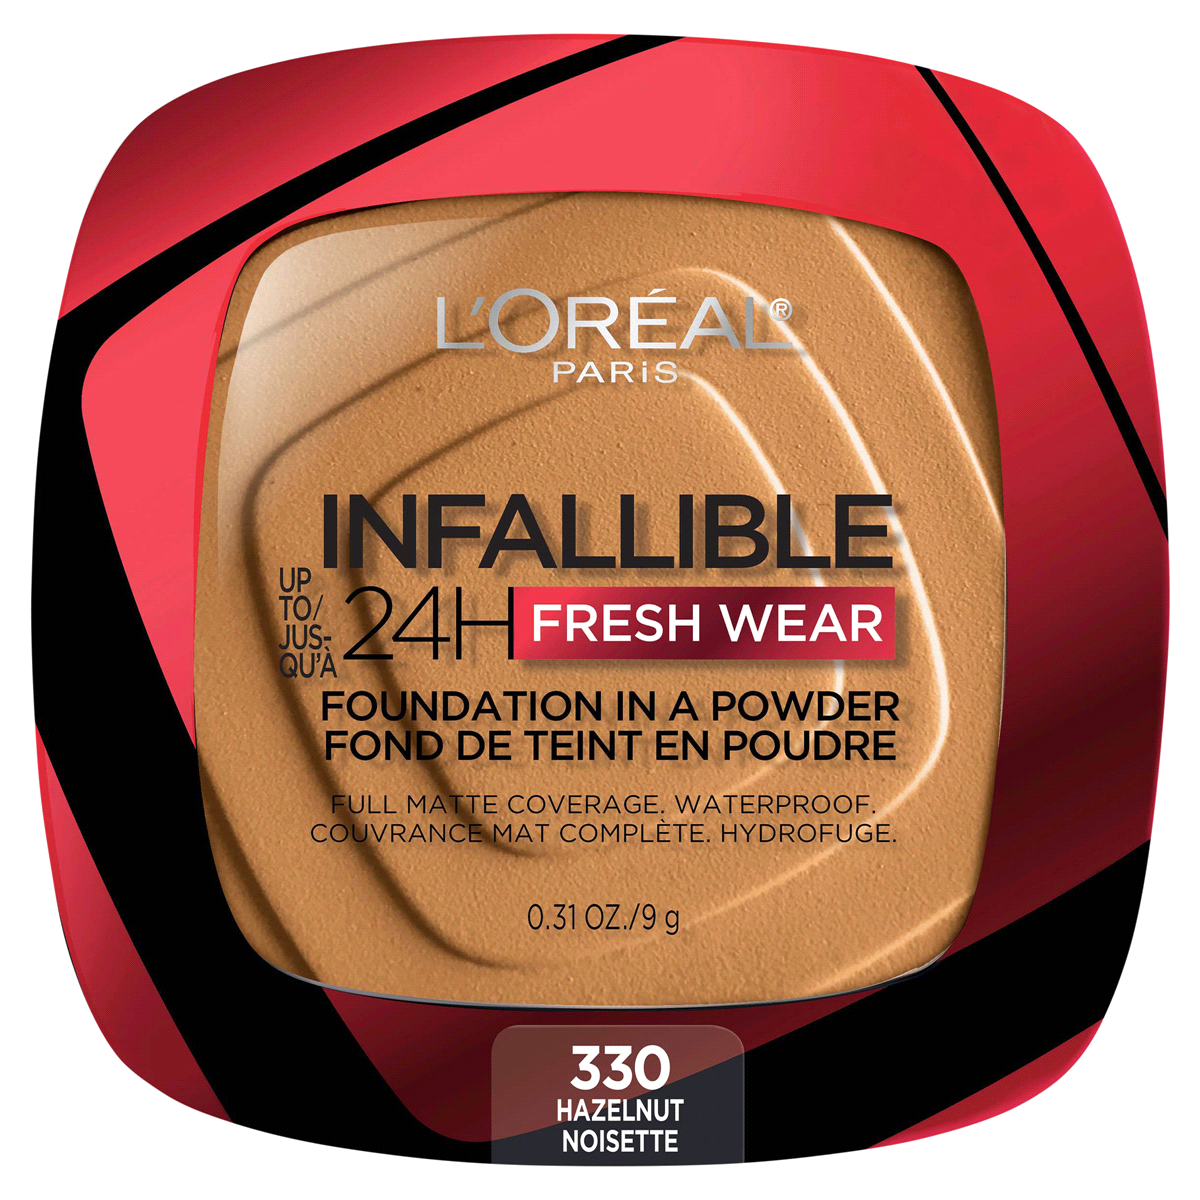 slide 1 of 1, L'Oréal Infallible up to 24h Fresh Wear Foundation in A Powder Hazelnut, 0.31 oz